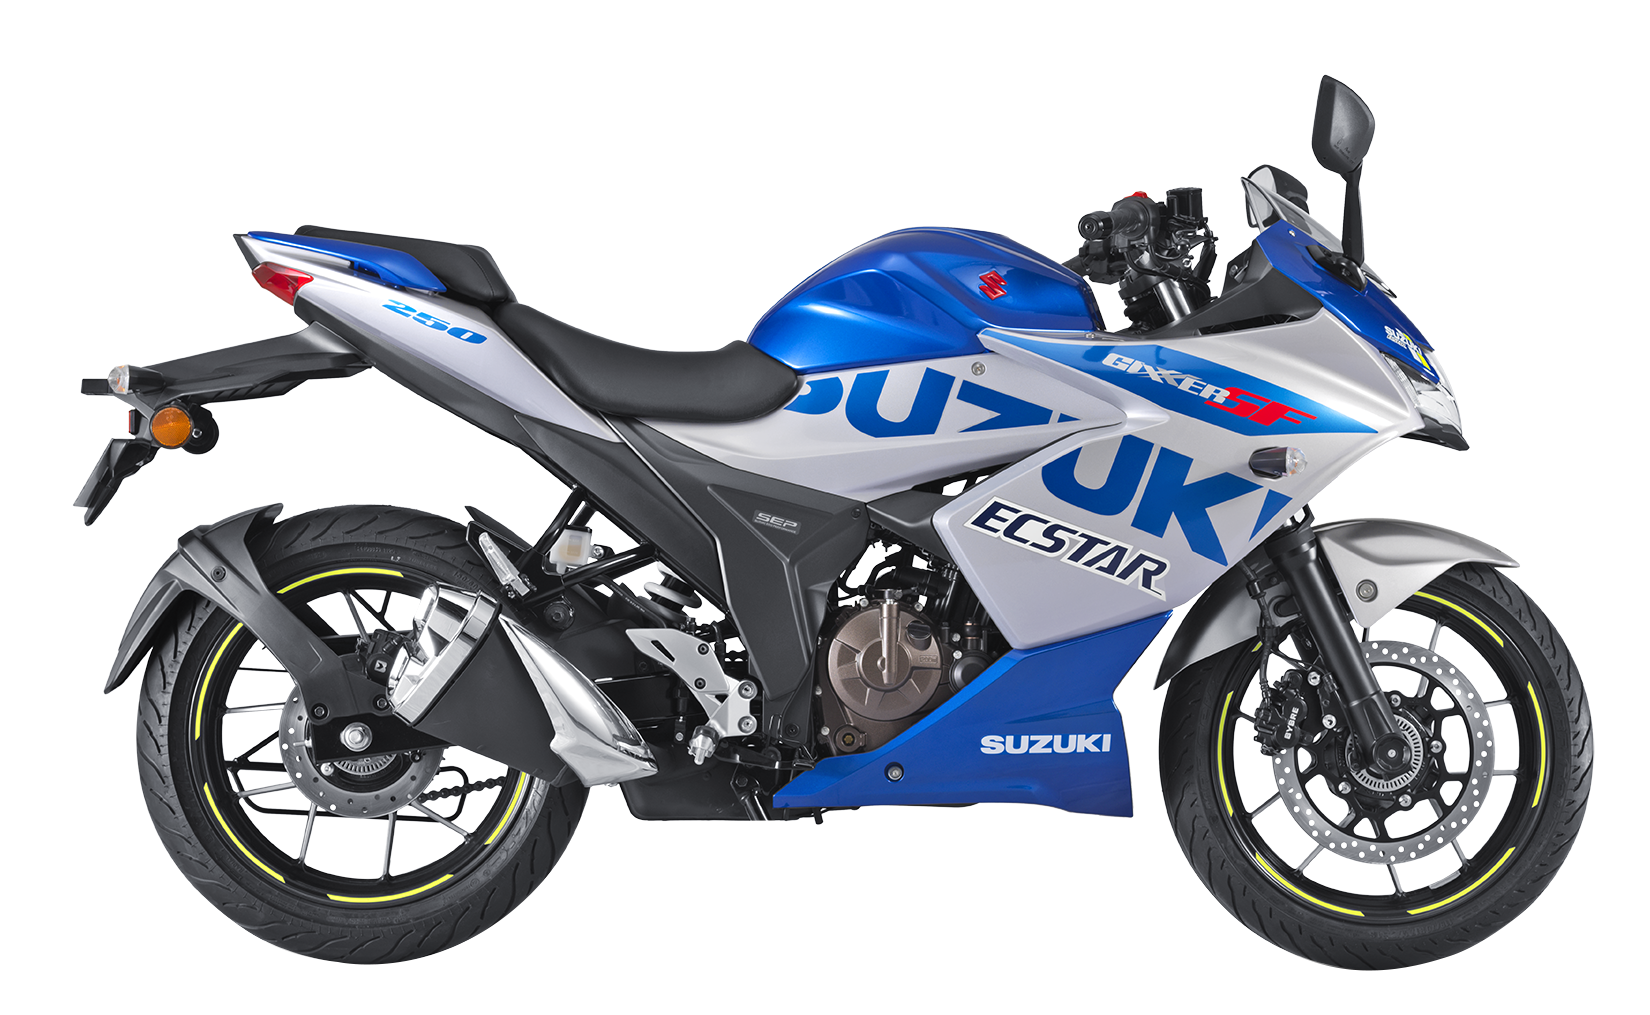 Skydrive Crossover Suzuki Motorcycles Philippines